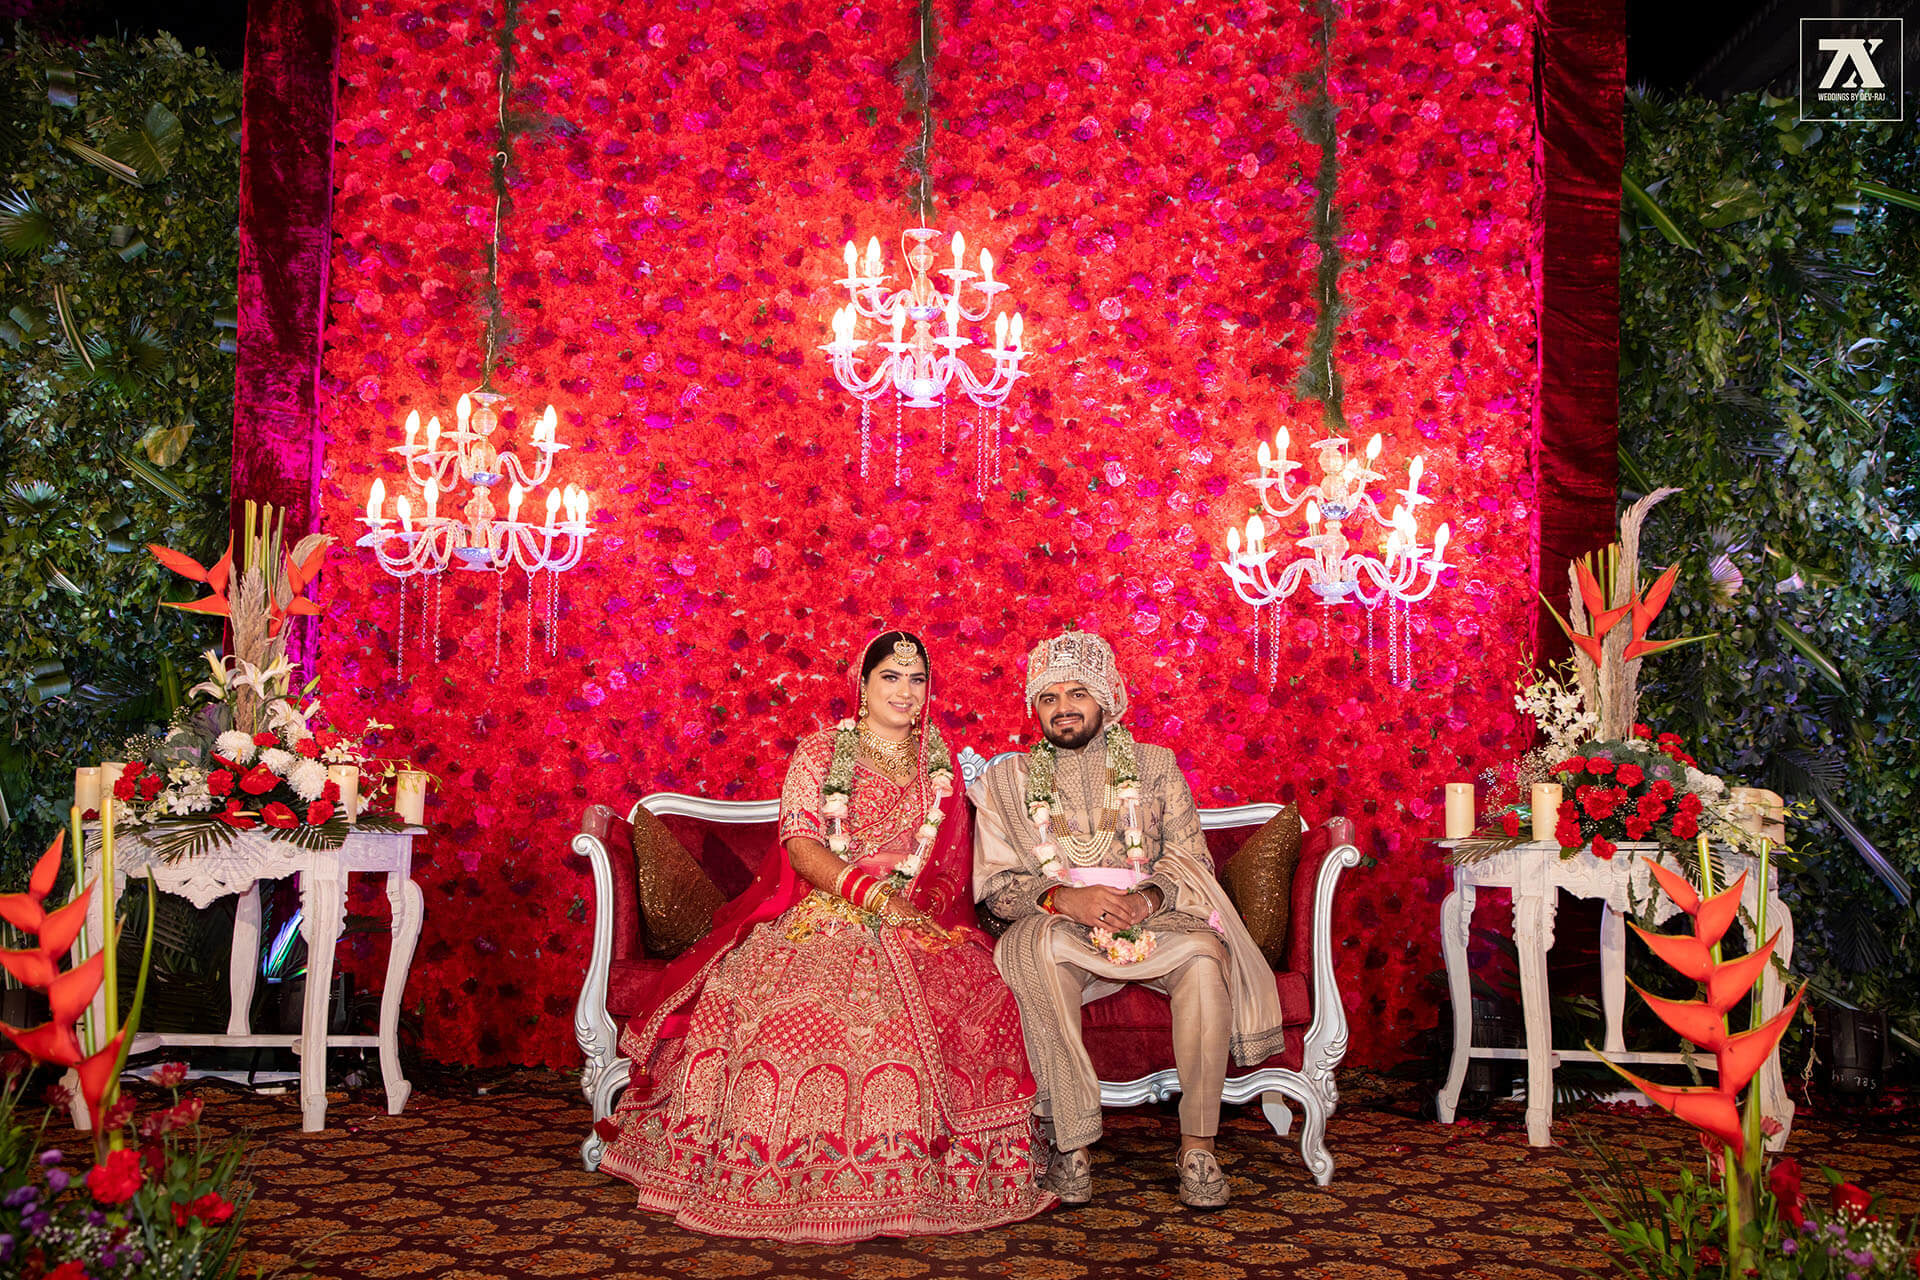 Anuj & Sonal Wedding album done by 7X Wedding Planner